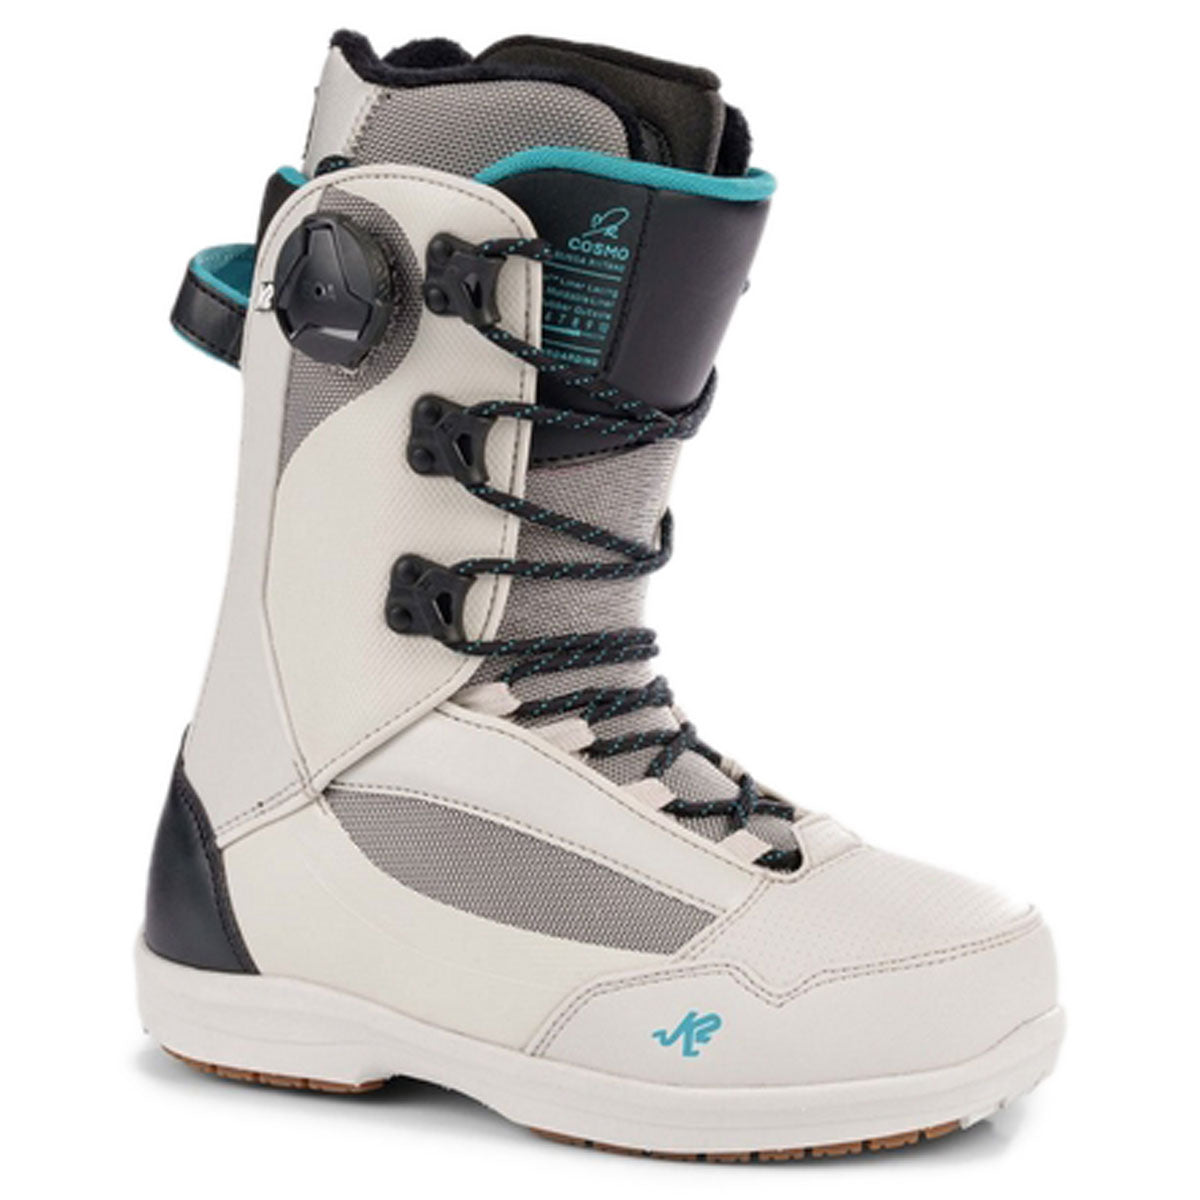 K2 Cosmo 2023 Snowboard Boots - Home Run/Melissa Riitano image 2